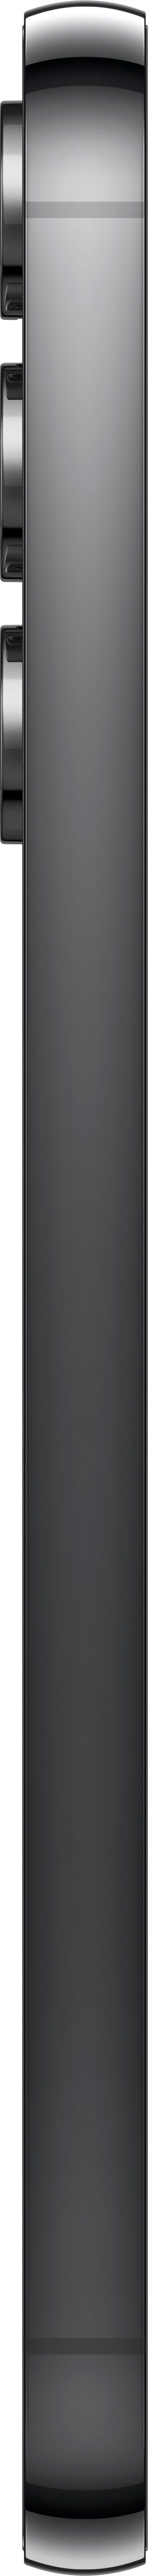 Samsung - Galaxy S23+ 256GB - Phantom Black (AT&T)_8